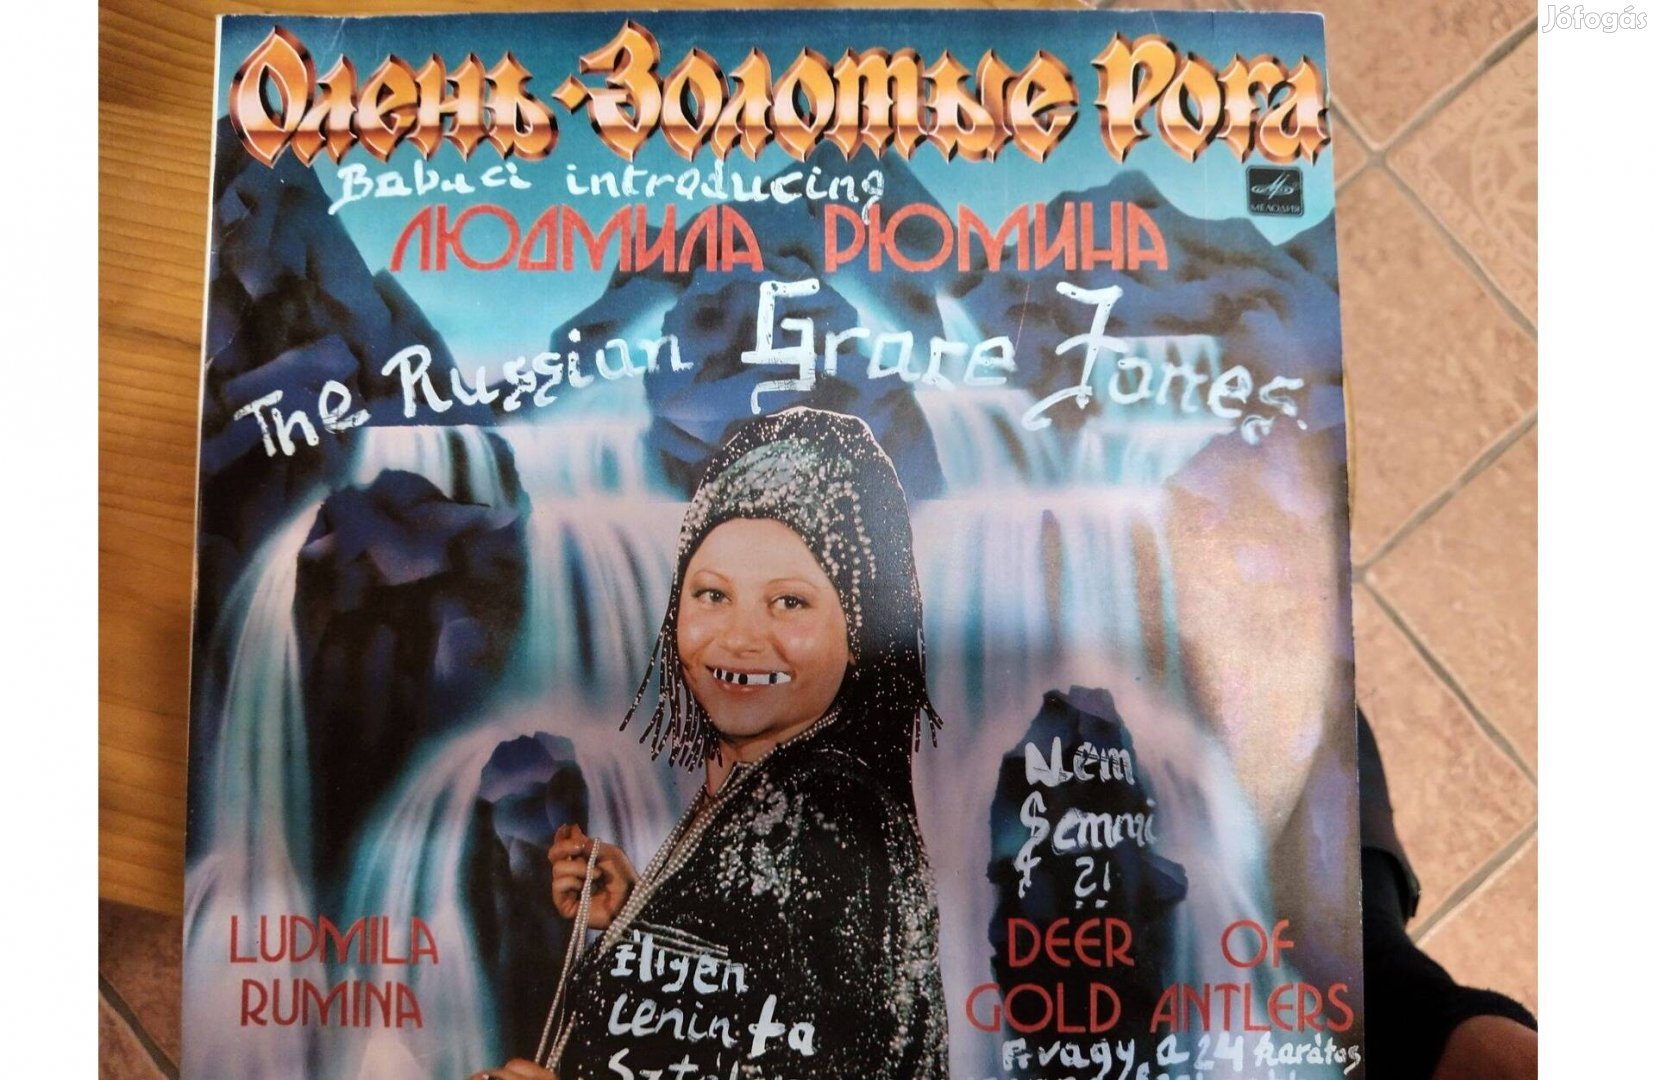 Ludmila Rumina bakelit hanglemez eladó